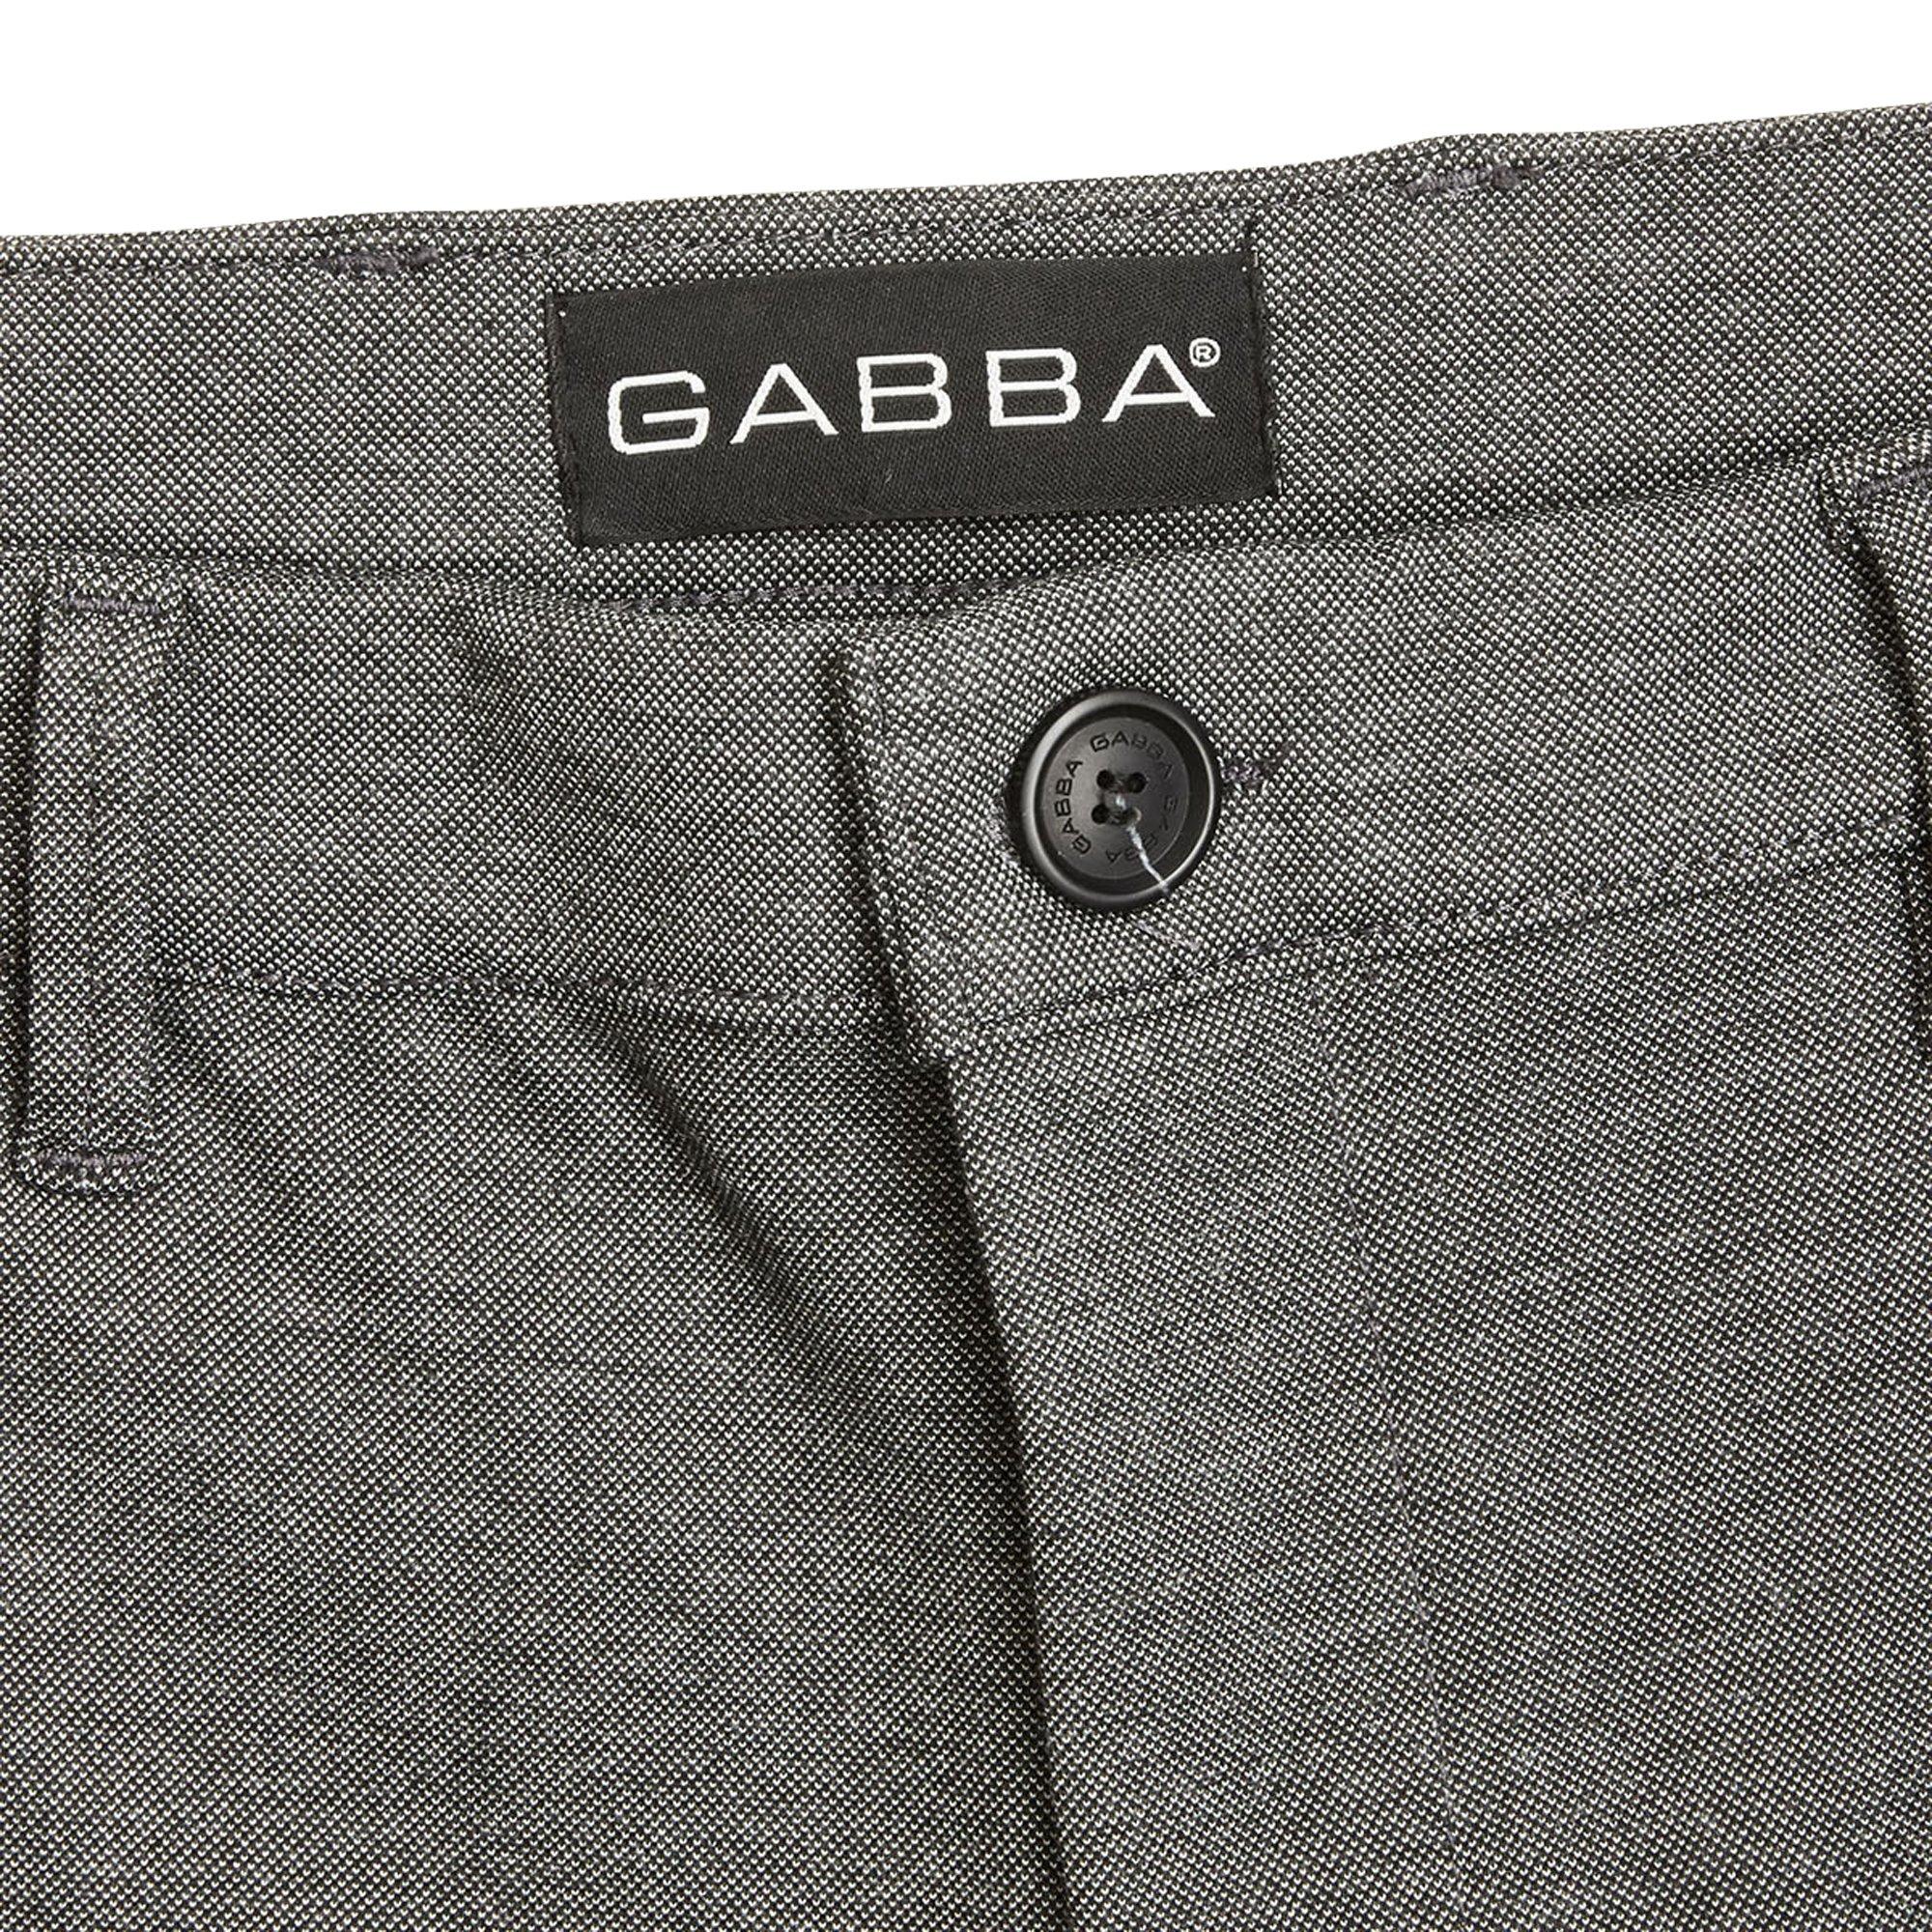 GABBA Pisa Jersey Pant Pantalon 